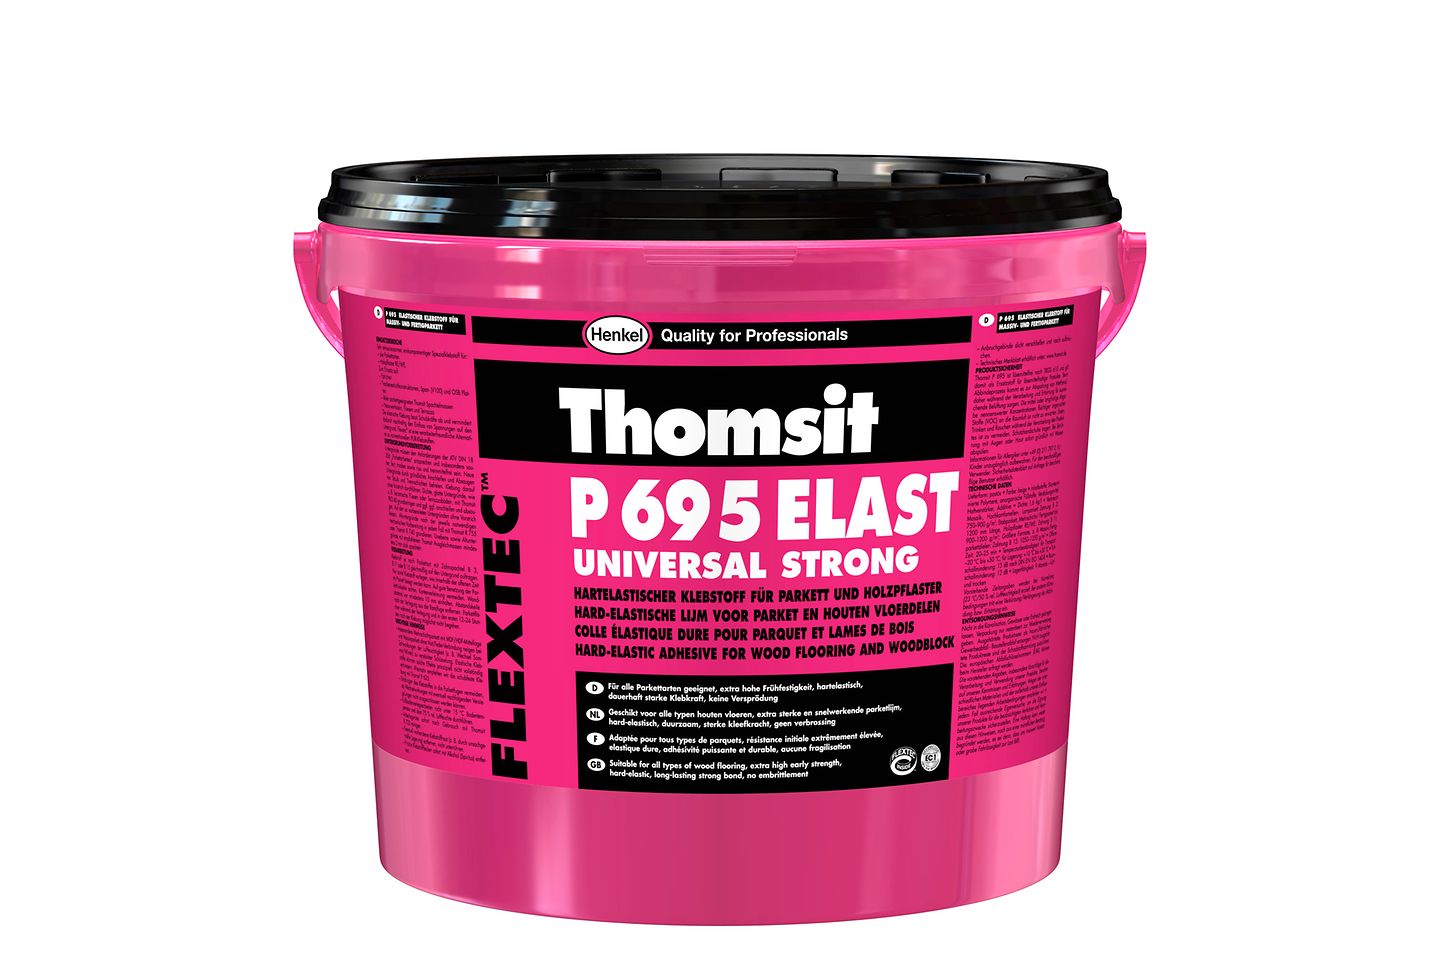 Thomsit P 695 Elast Universal Strong 